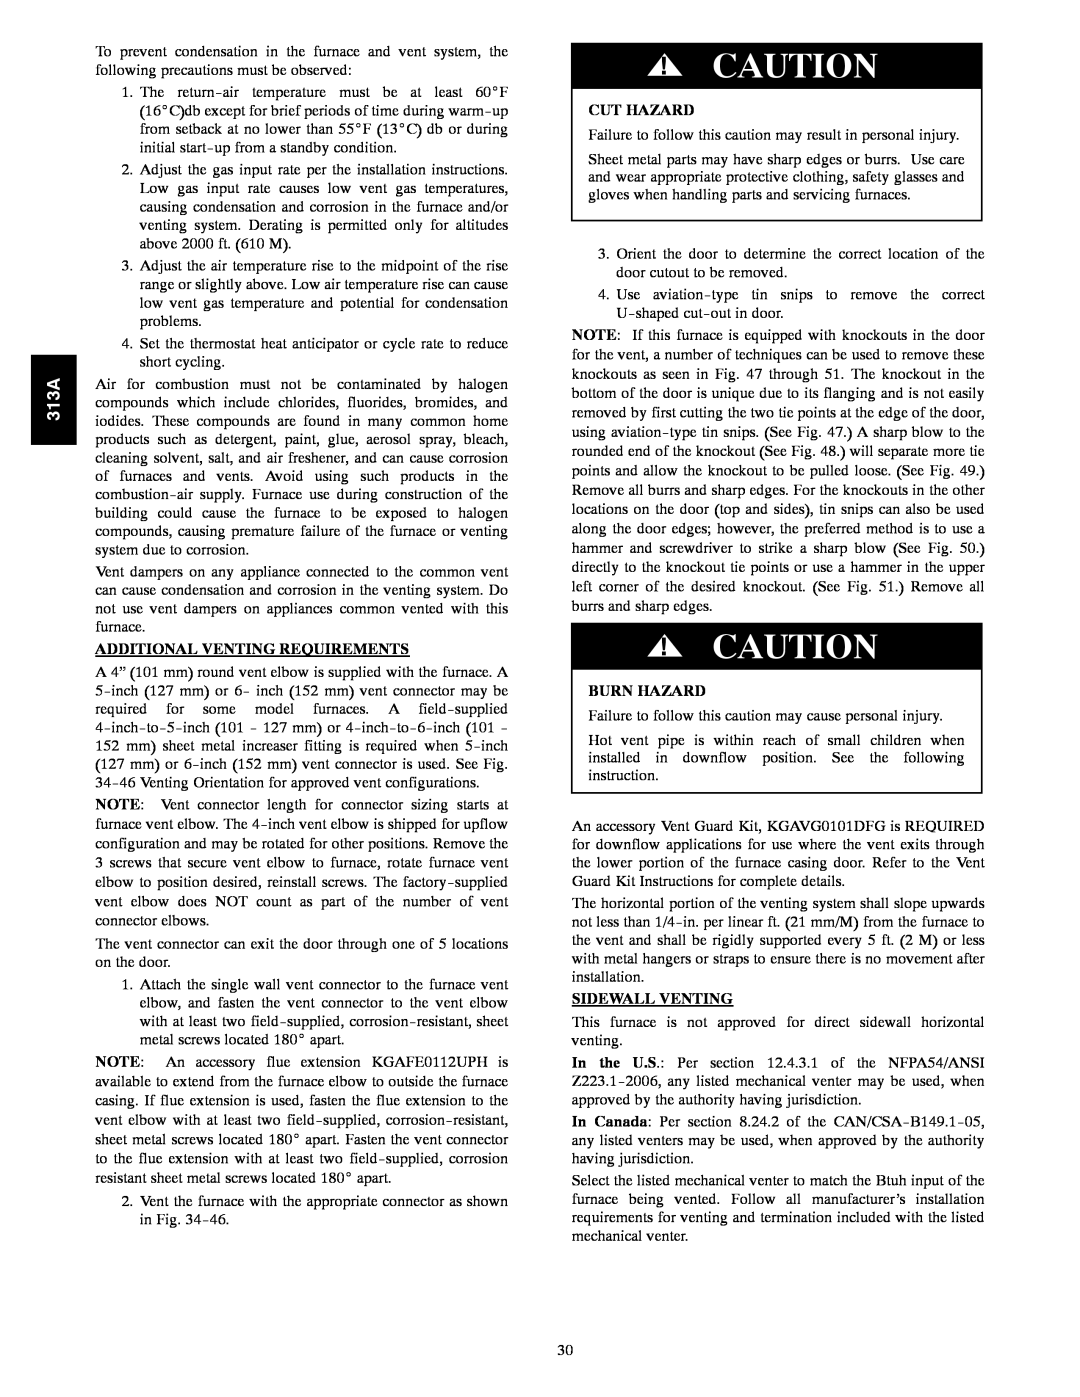 Bryant 313AAV instruction manual Additional Venting Requirements, Cut Hazard, Burn Hazard, Sidewall Venting 